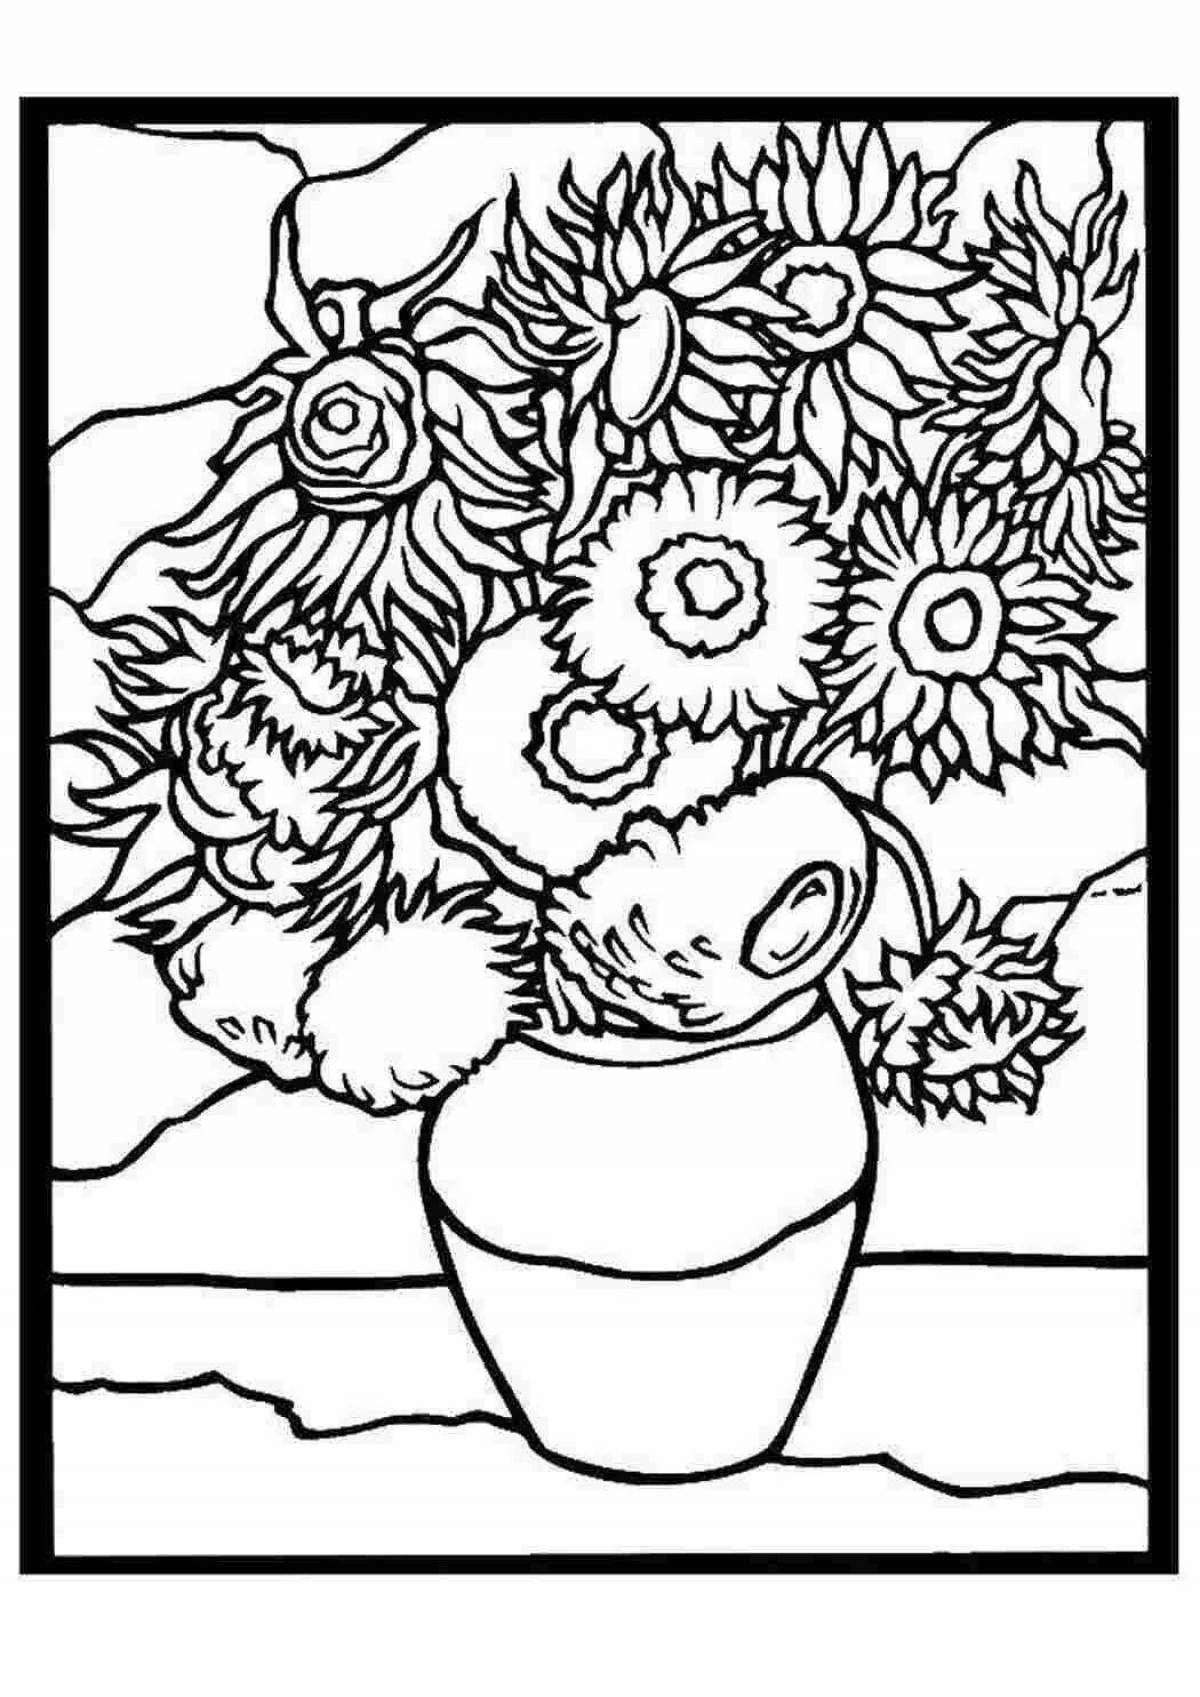 Cute van gogh sunflowers coloring book